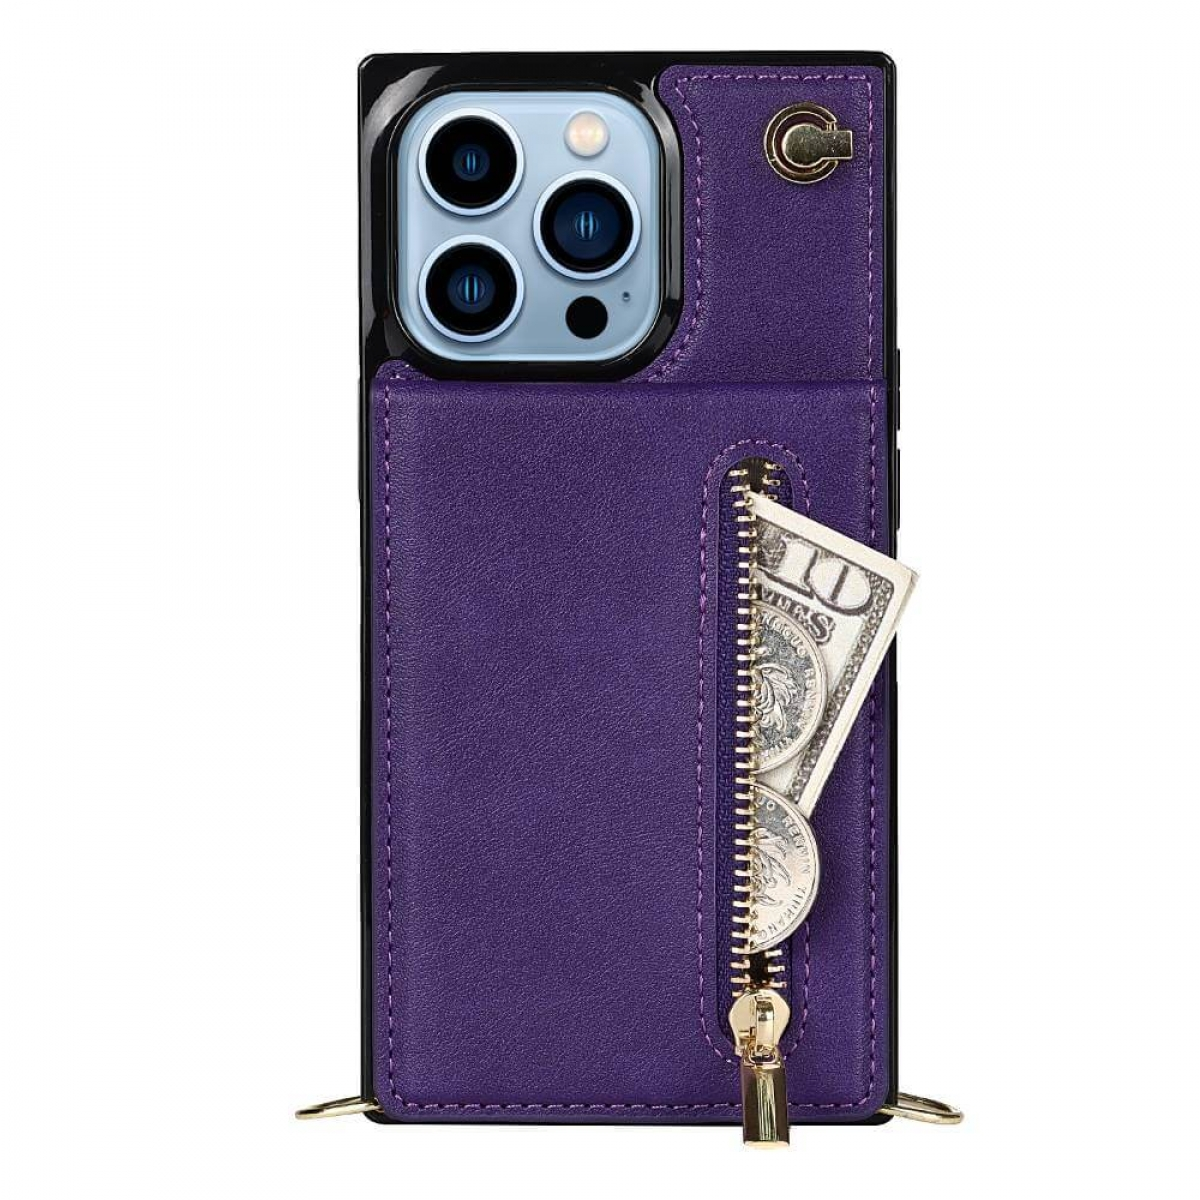 Necklace, Apple, 13 iPhone CASEONLINE Violett Pro, Zipper Umhängetasche,